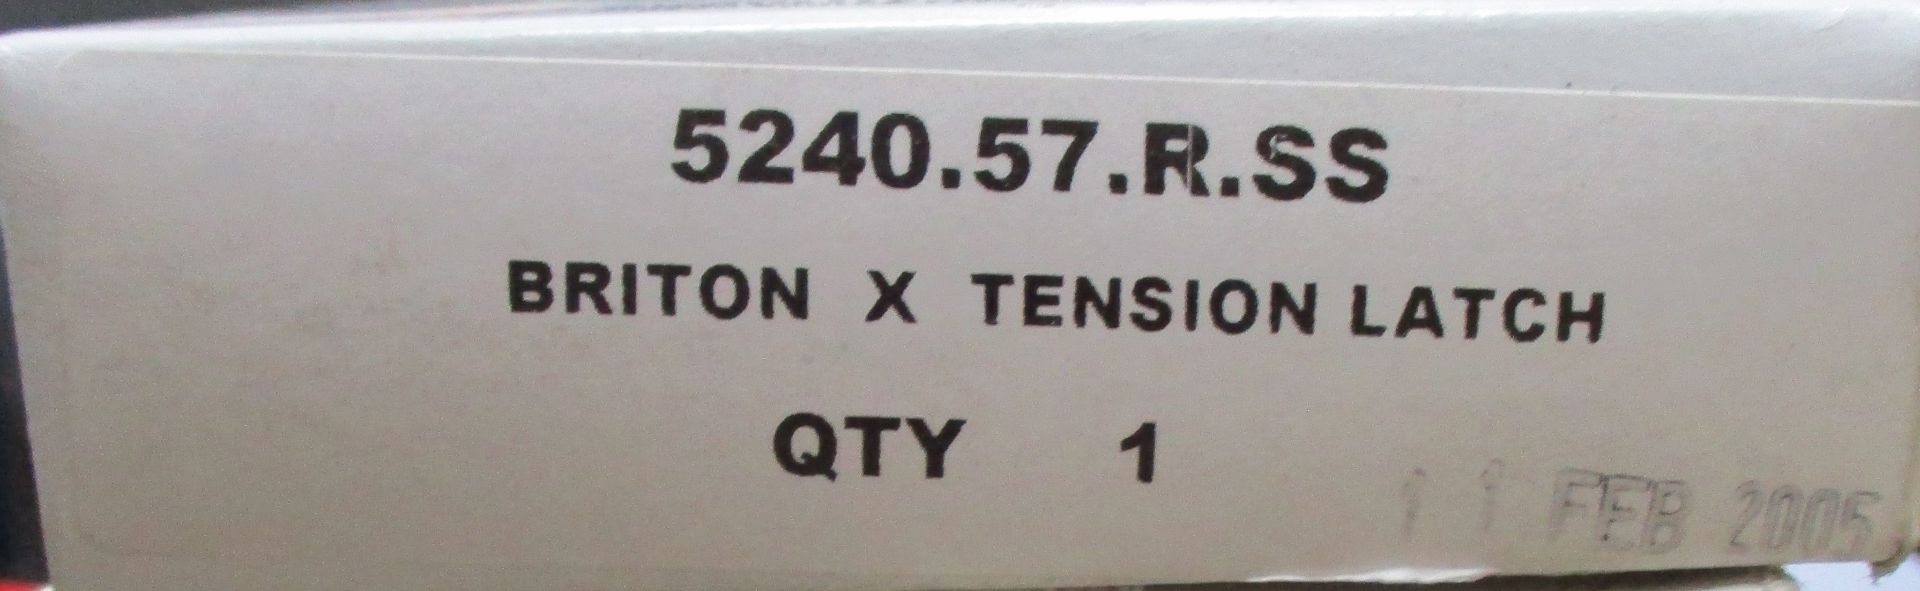 1 x Briton x Tension latch 57mm Backset - Brand New Stock - Location: Peterlee, SR8 - Image 3 of 3